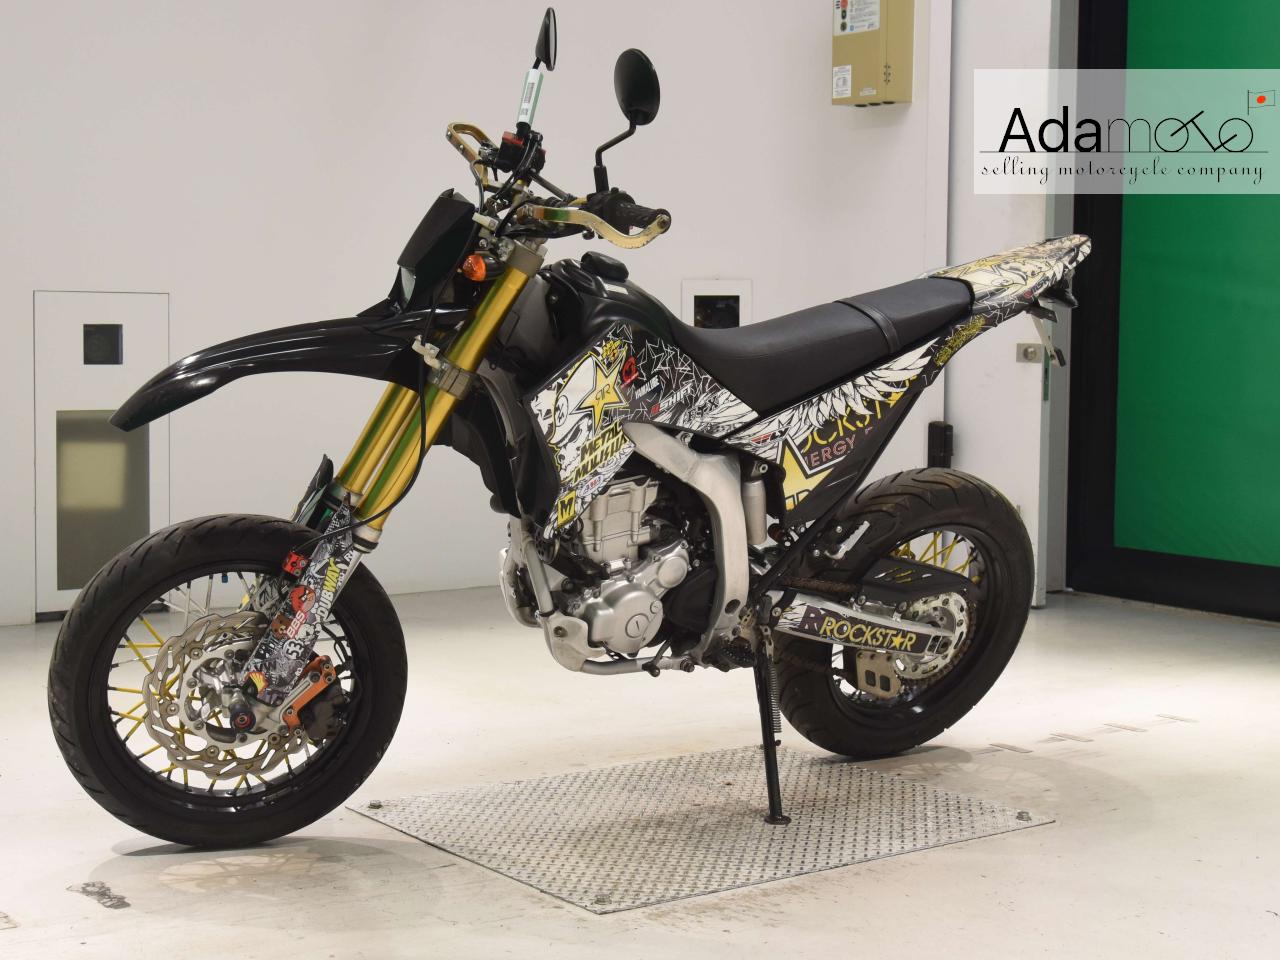 Yamaha WR250R - Adamoto - Motorcycles from Japan